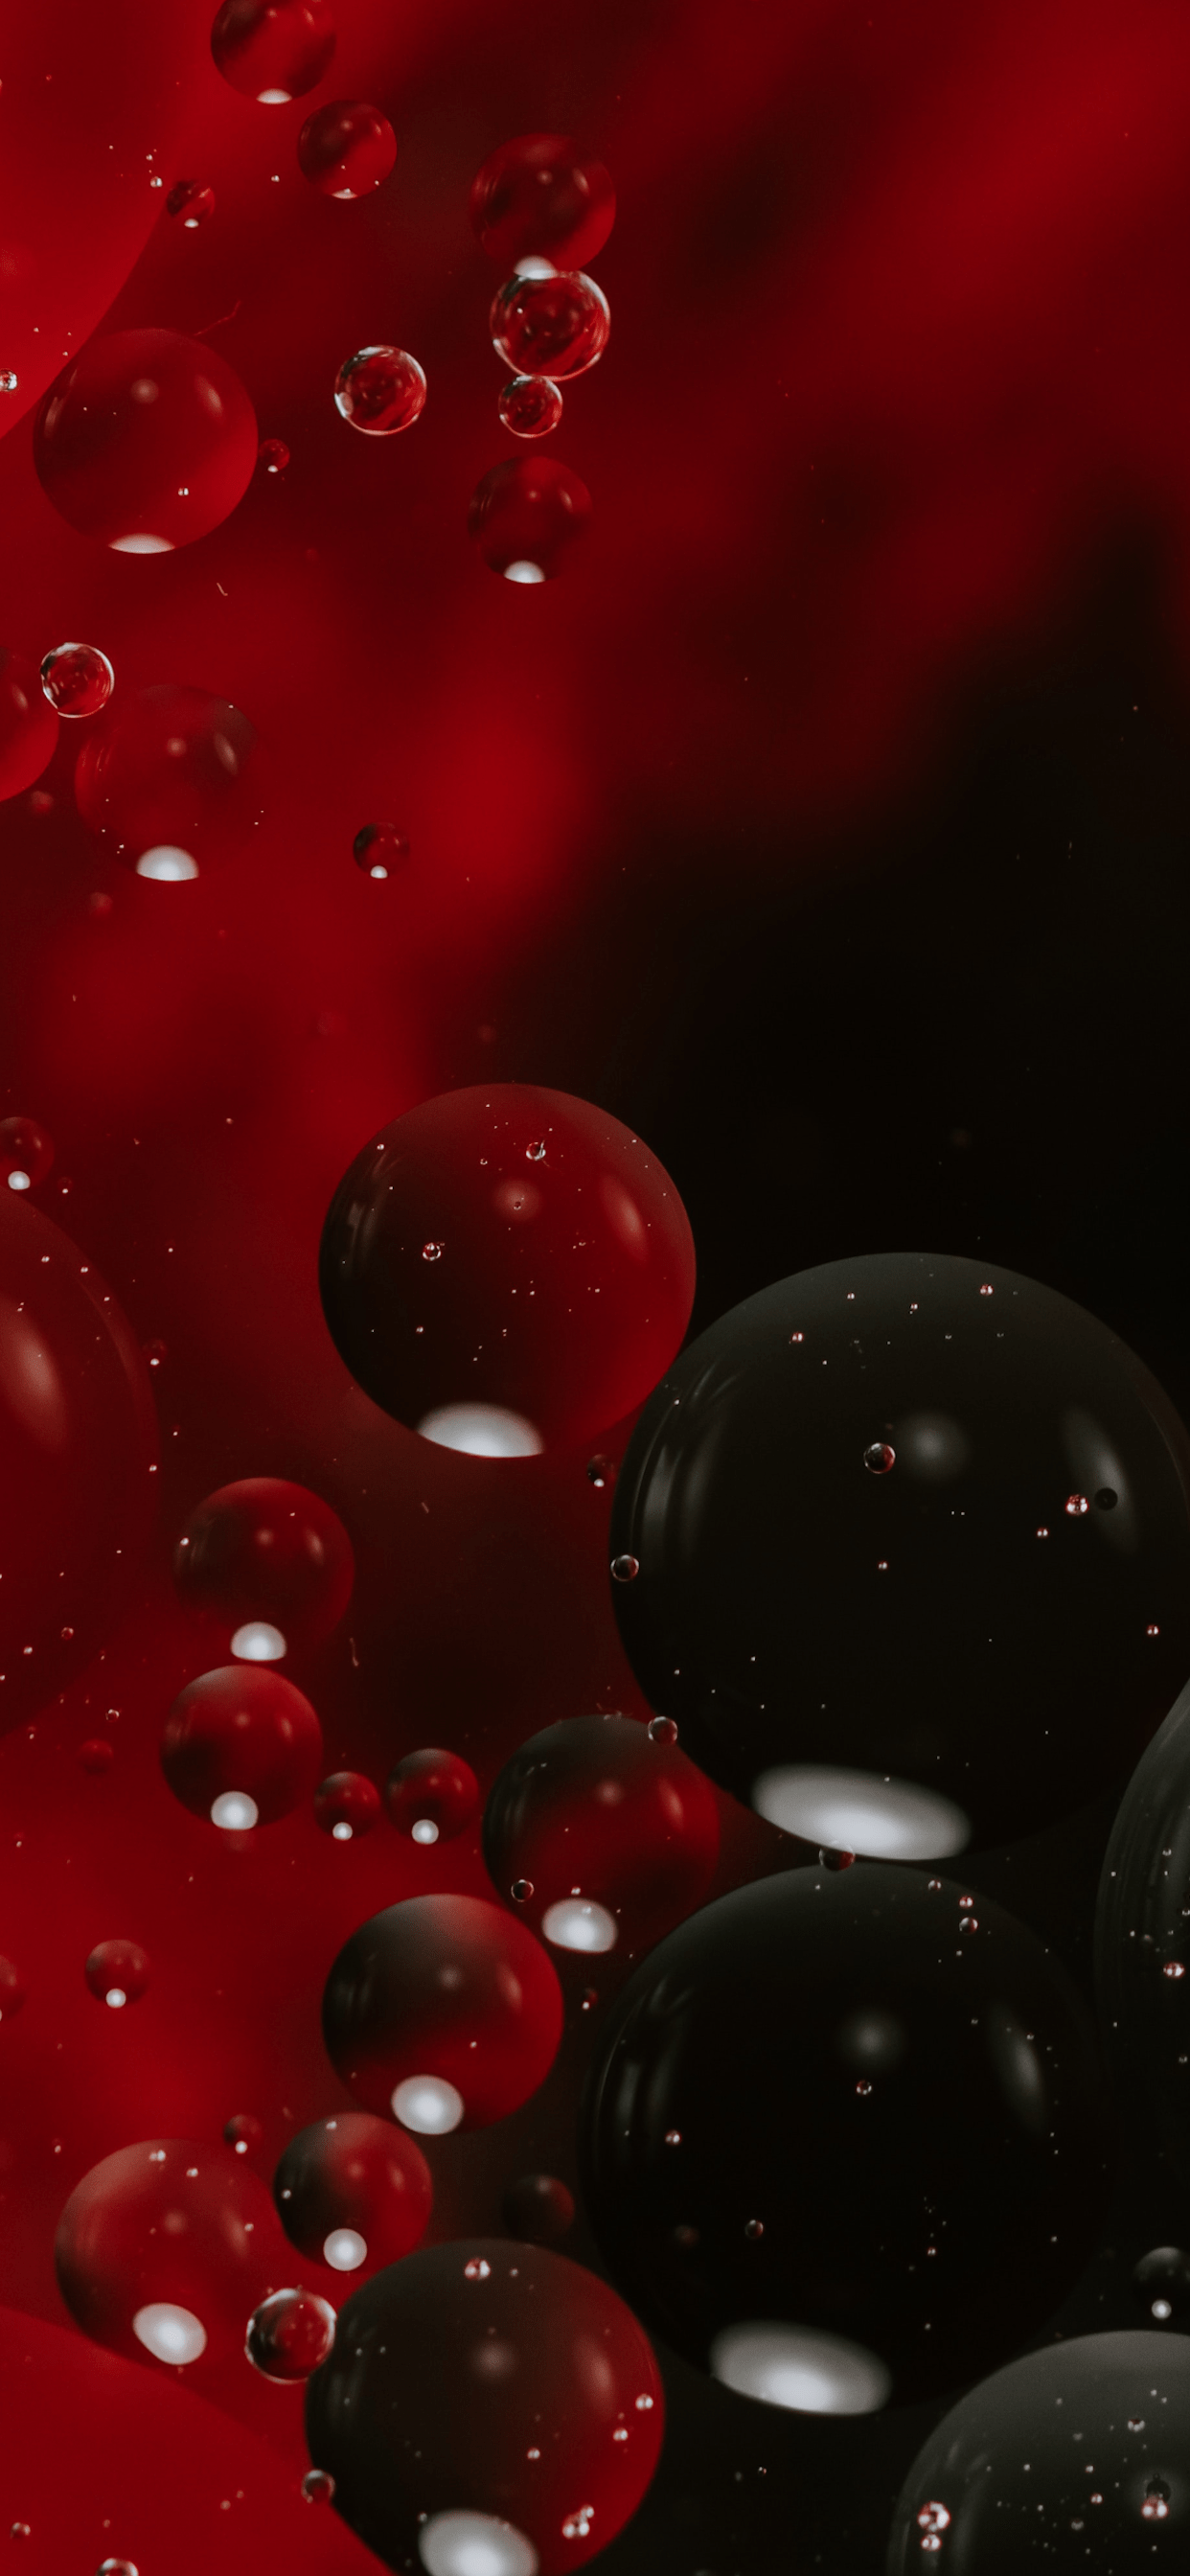 Bubbles Wallpaper for iPhone Pro Max, X, 6